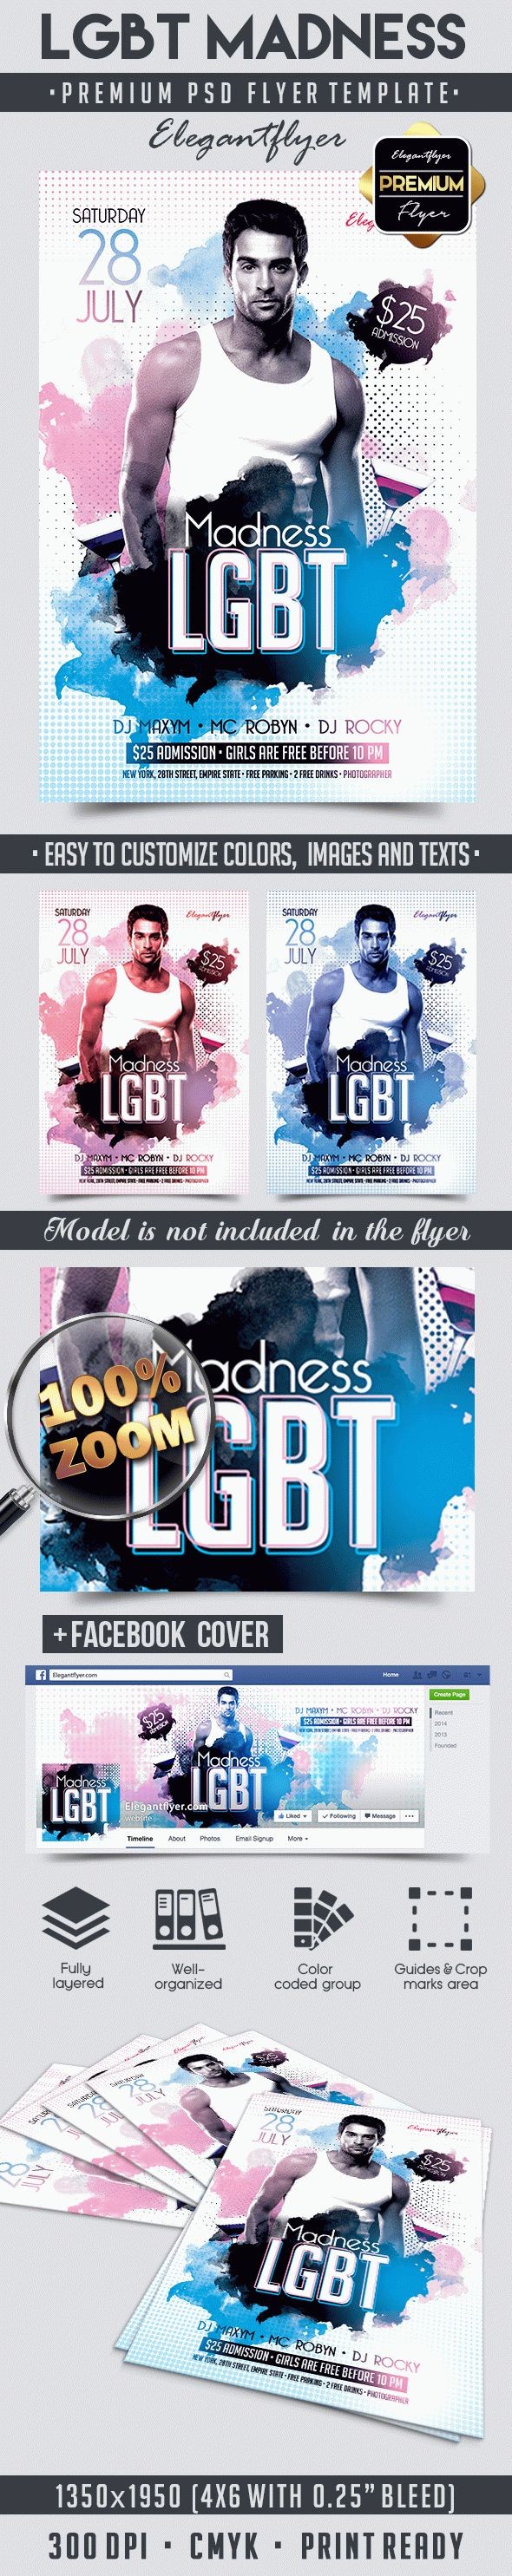 LGBT Madness Flyer by ElegantFlyer